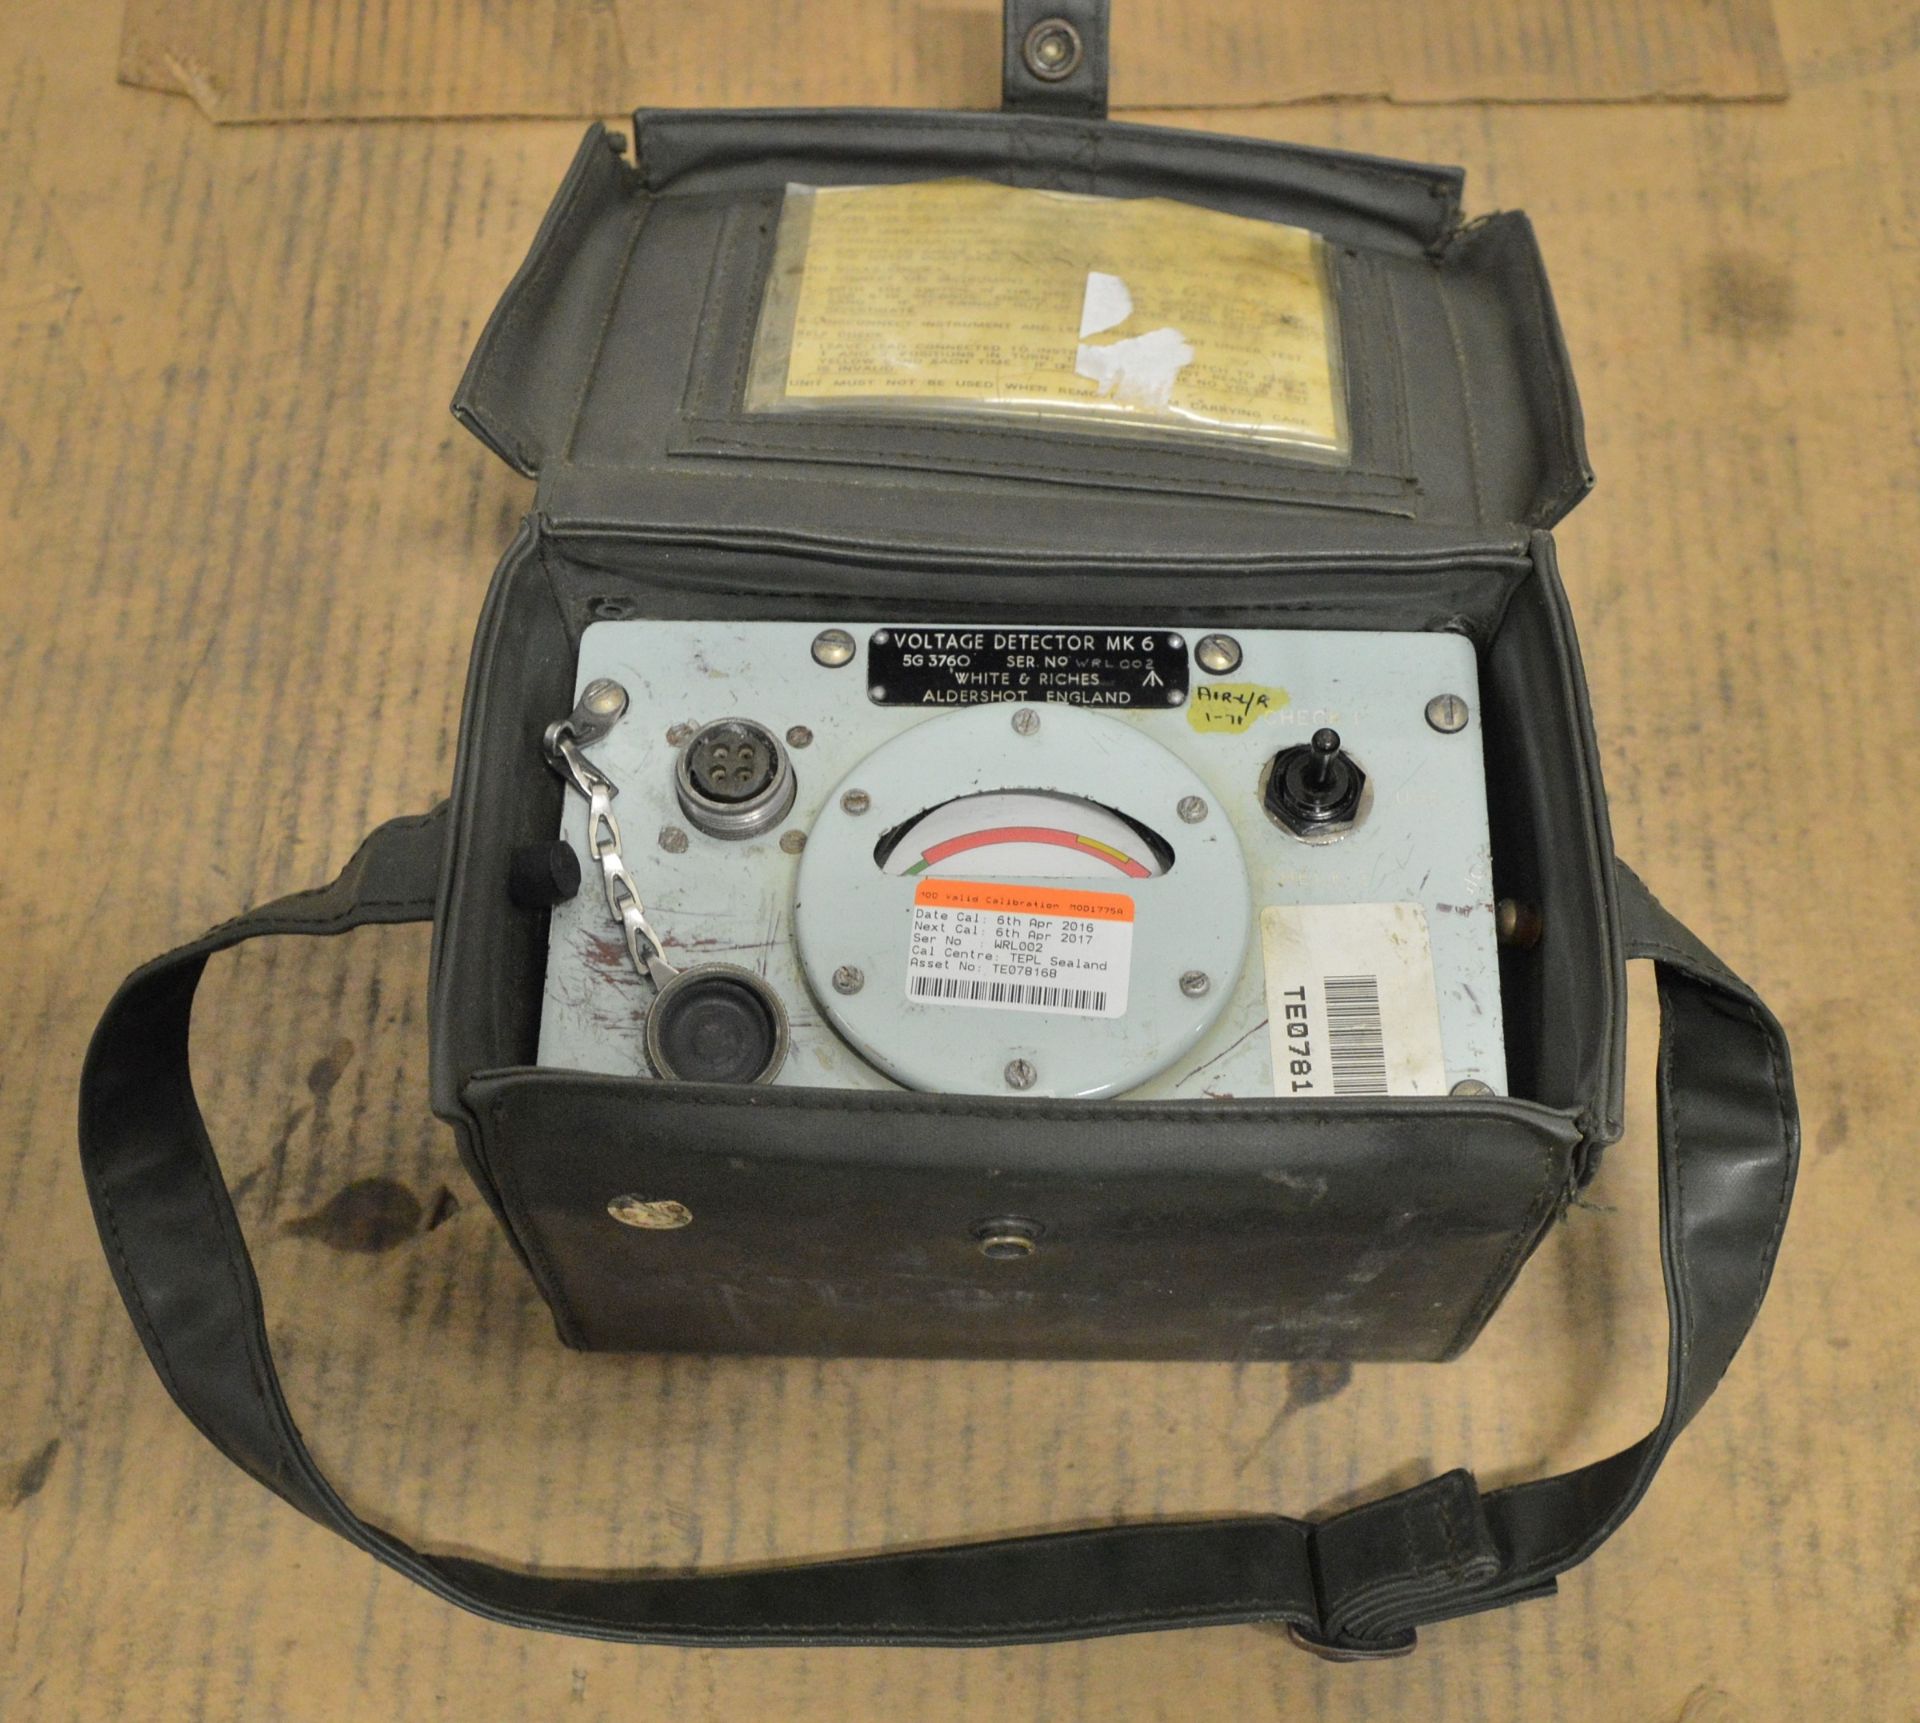 Air Log LTD MK6 Voltage Detector